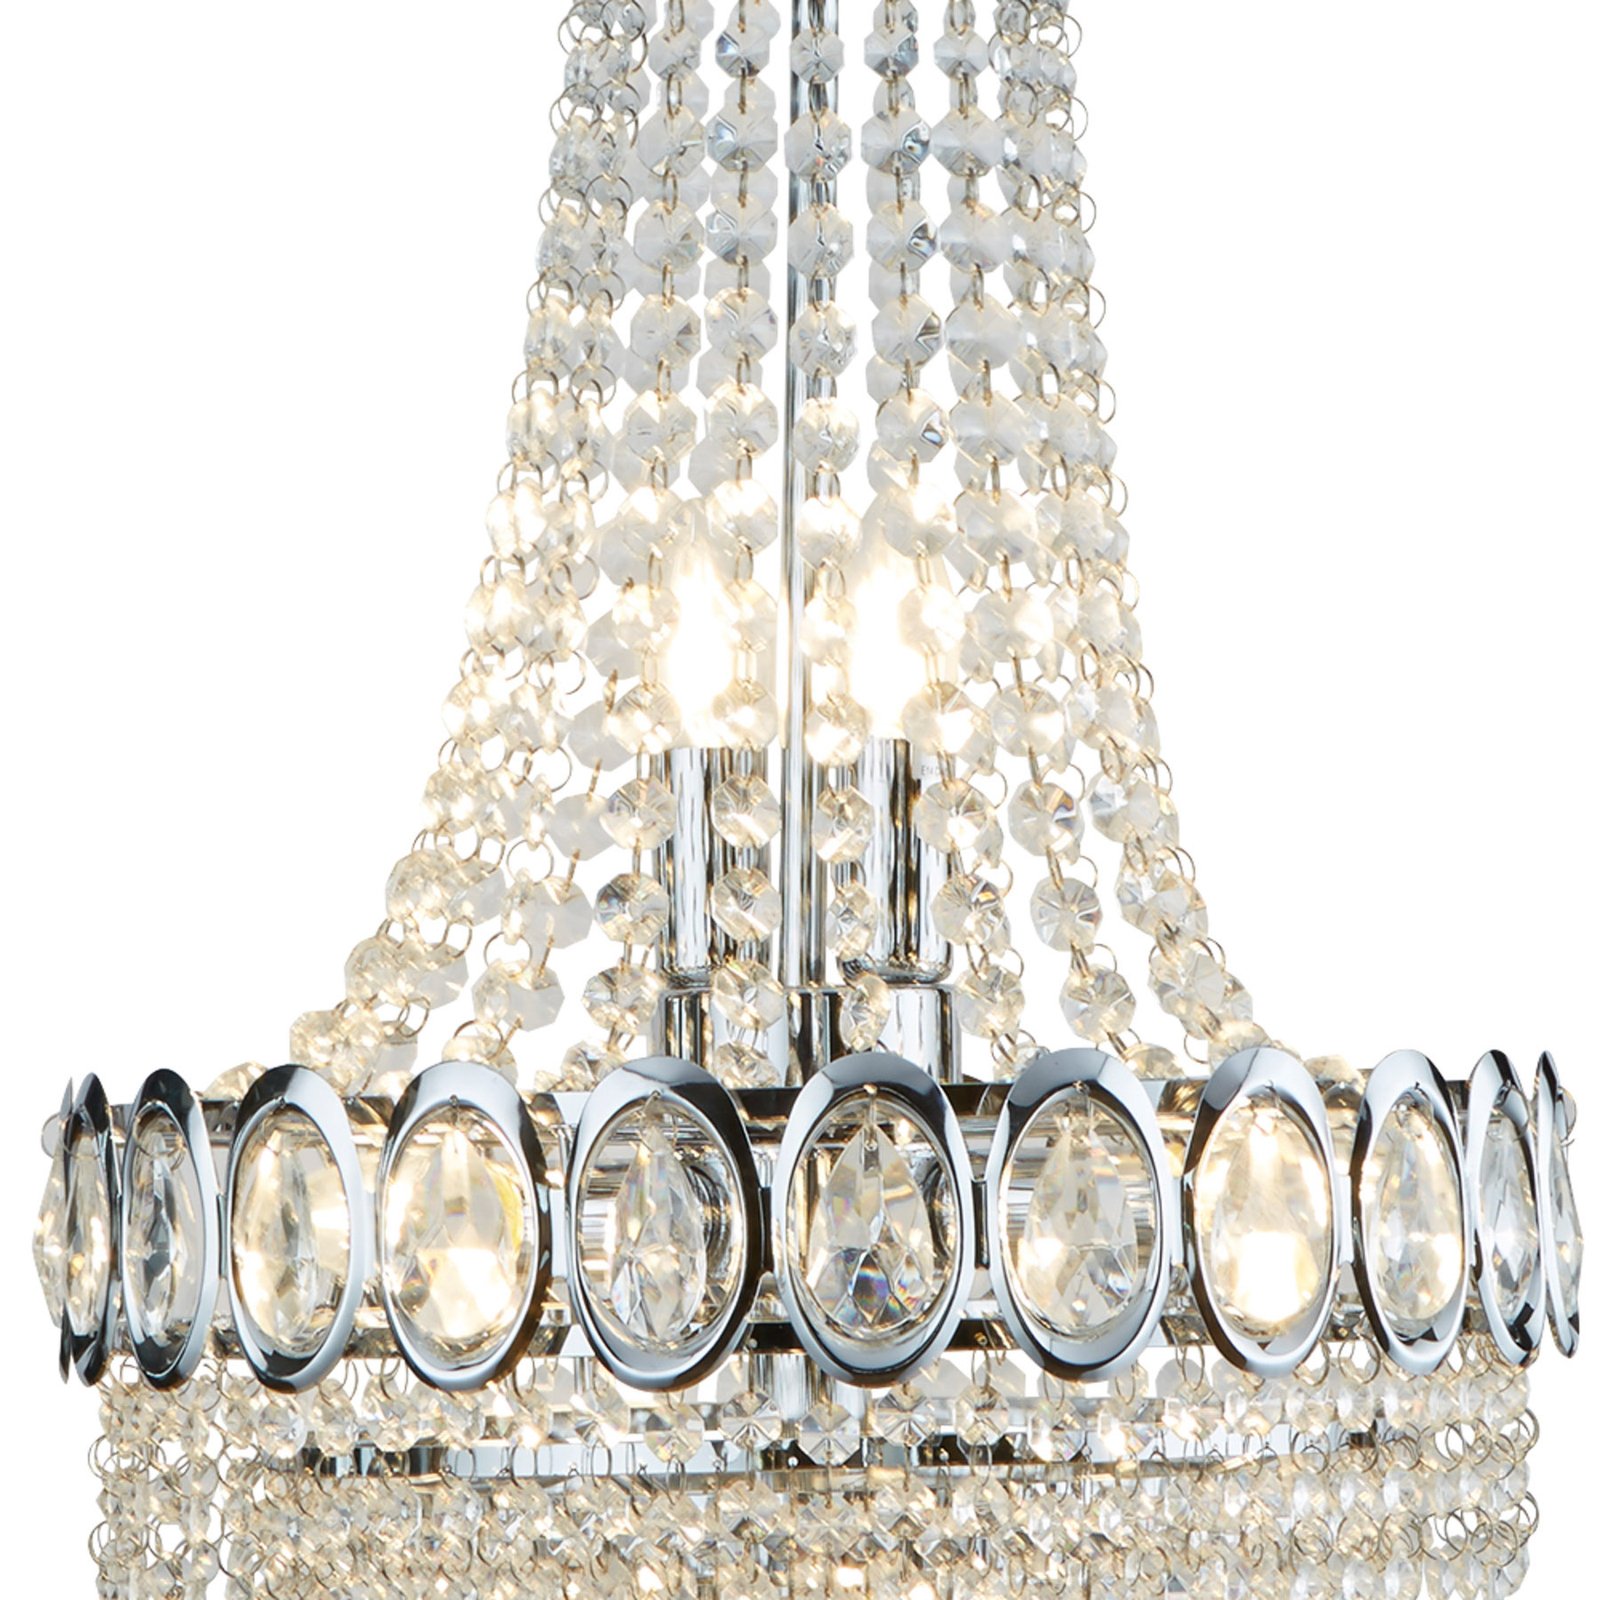 Limoges chandelier, glass bead hanging elements